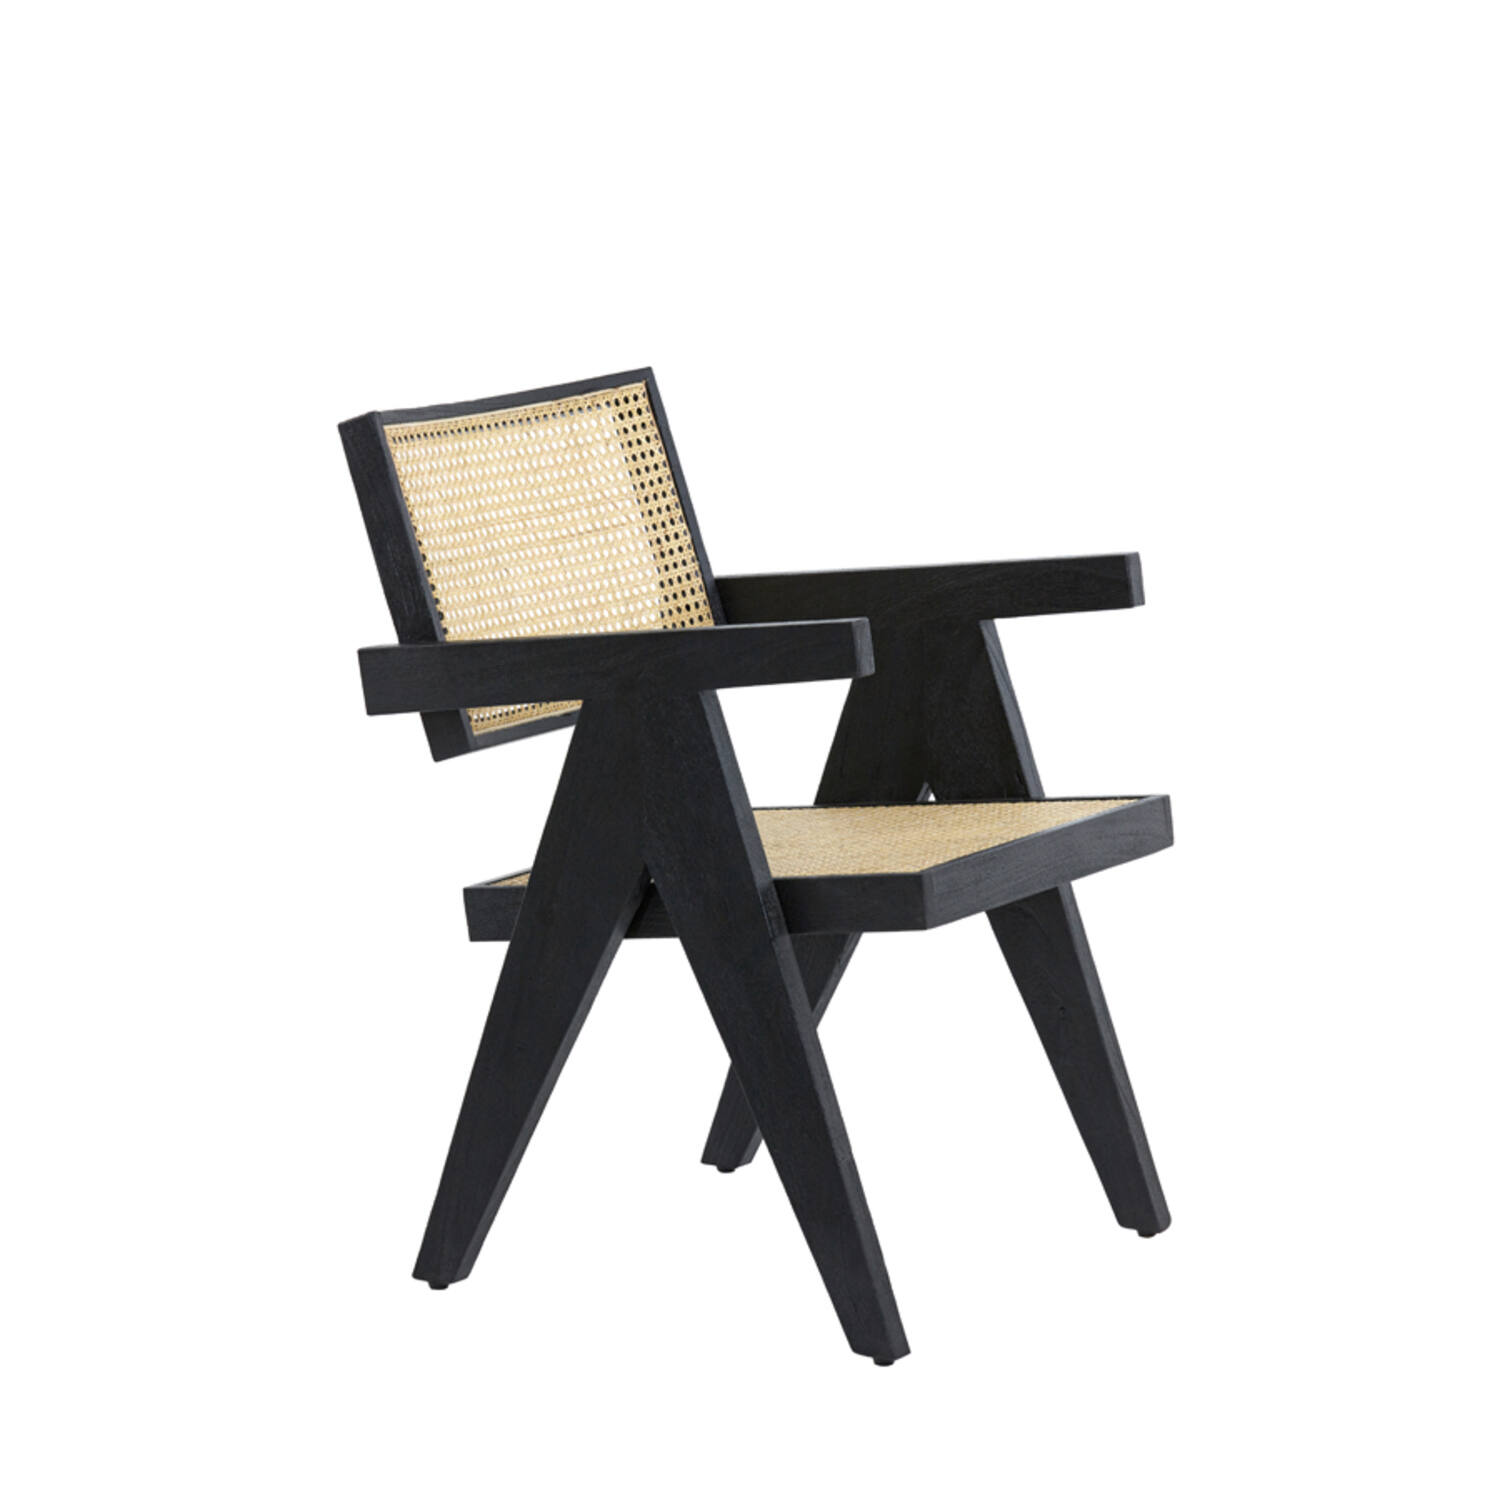 Chair 56x53x79 cm MORAZAN wood black+rattan natural